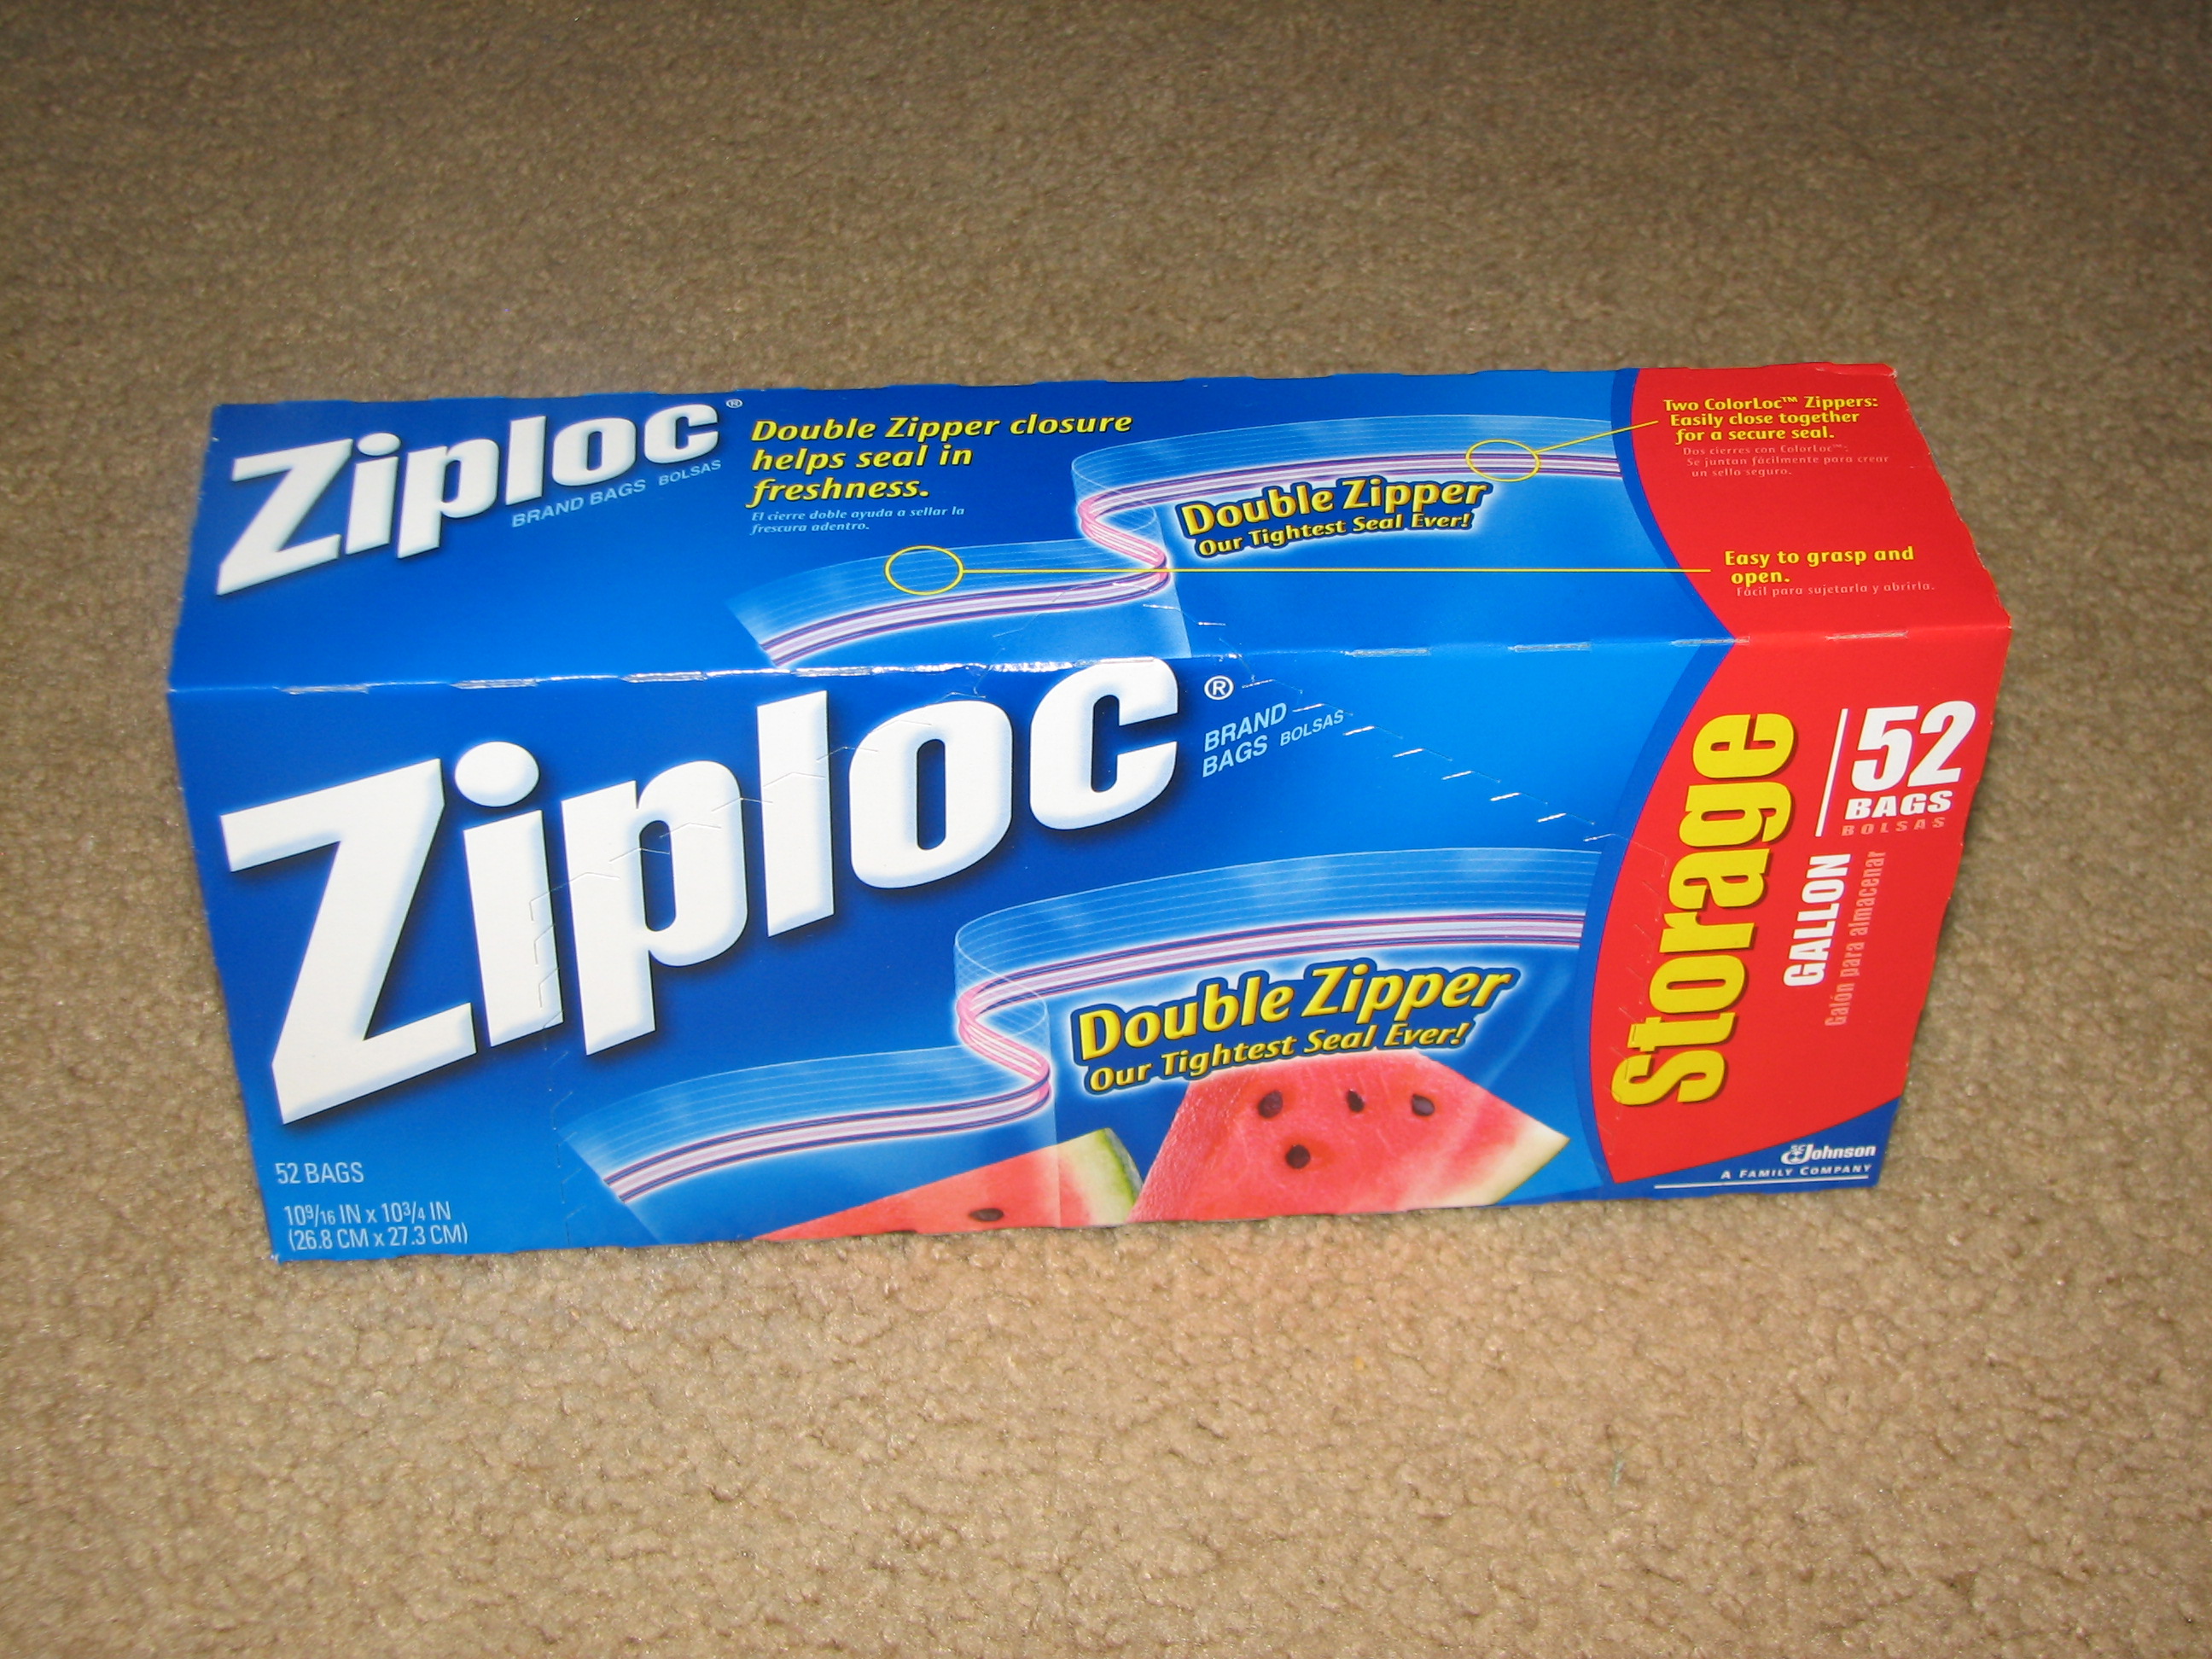 Gallon Ziploc box